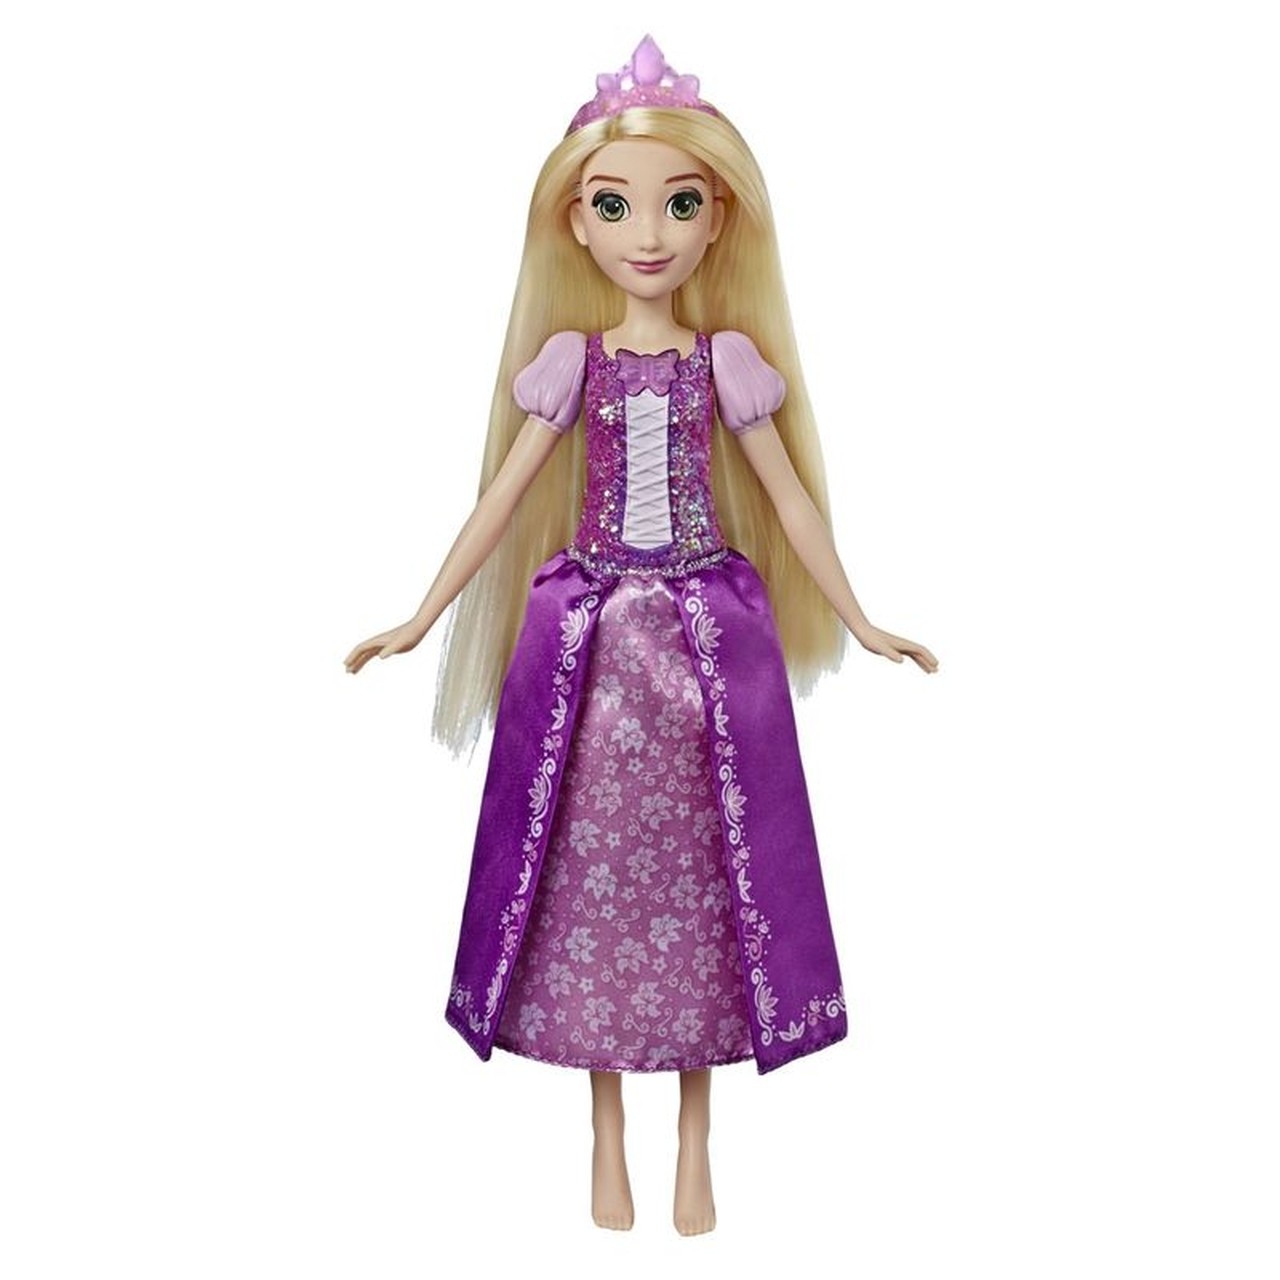 Boneca Princesa Da Disney Rapunzel Cantora - Hasbro E3046